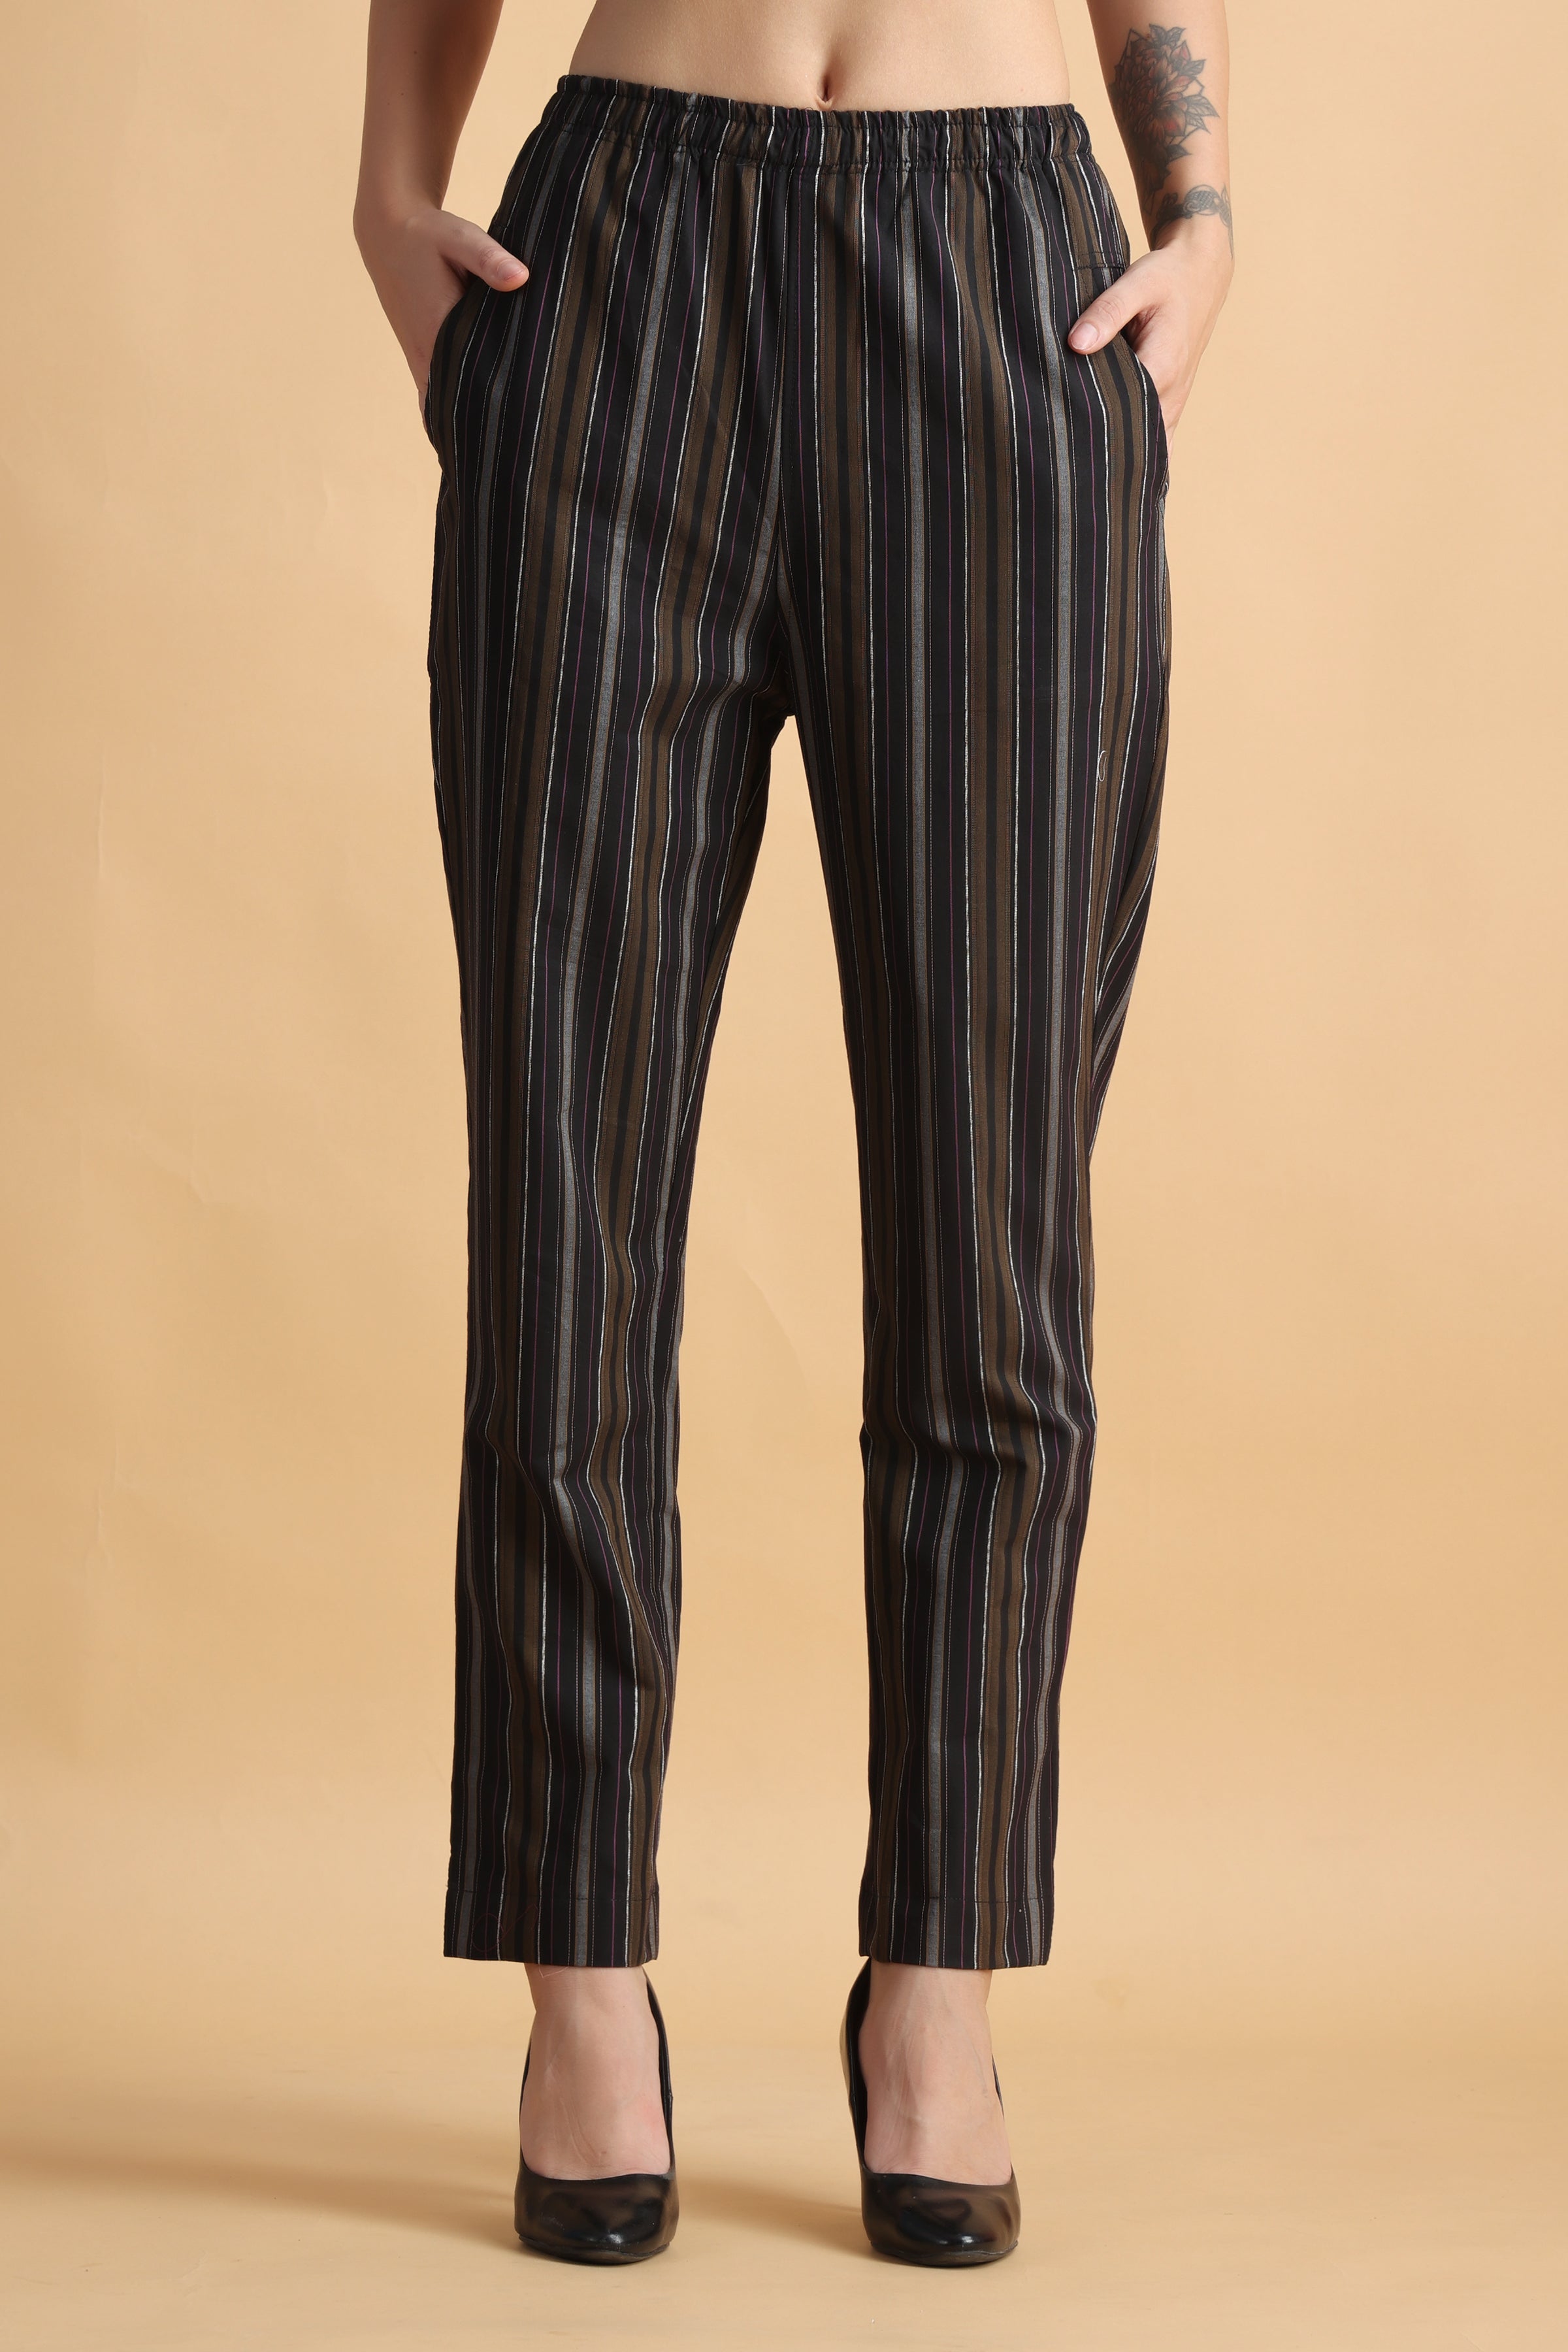 Women's Black, Flat Front, Tuxedo Pants with Satin Stripe - 99tux